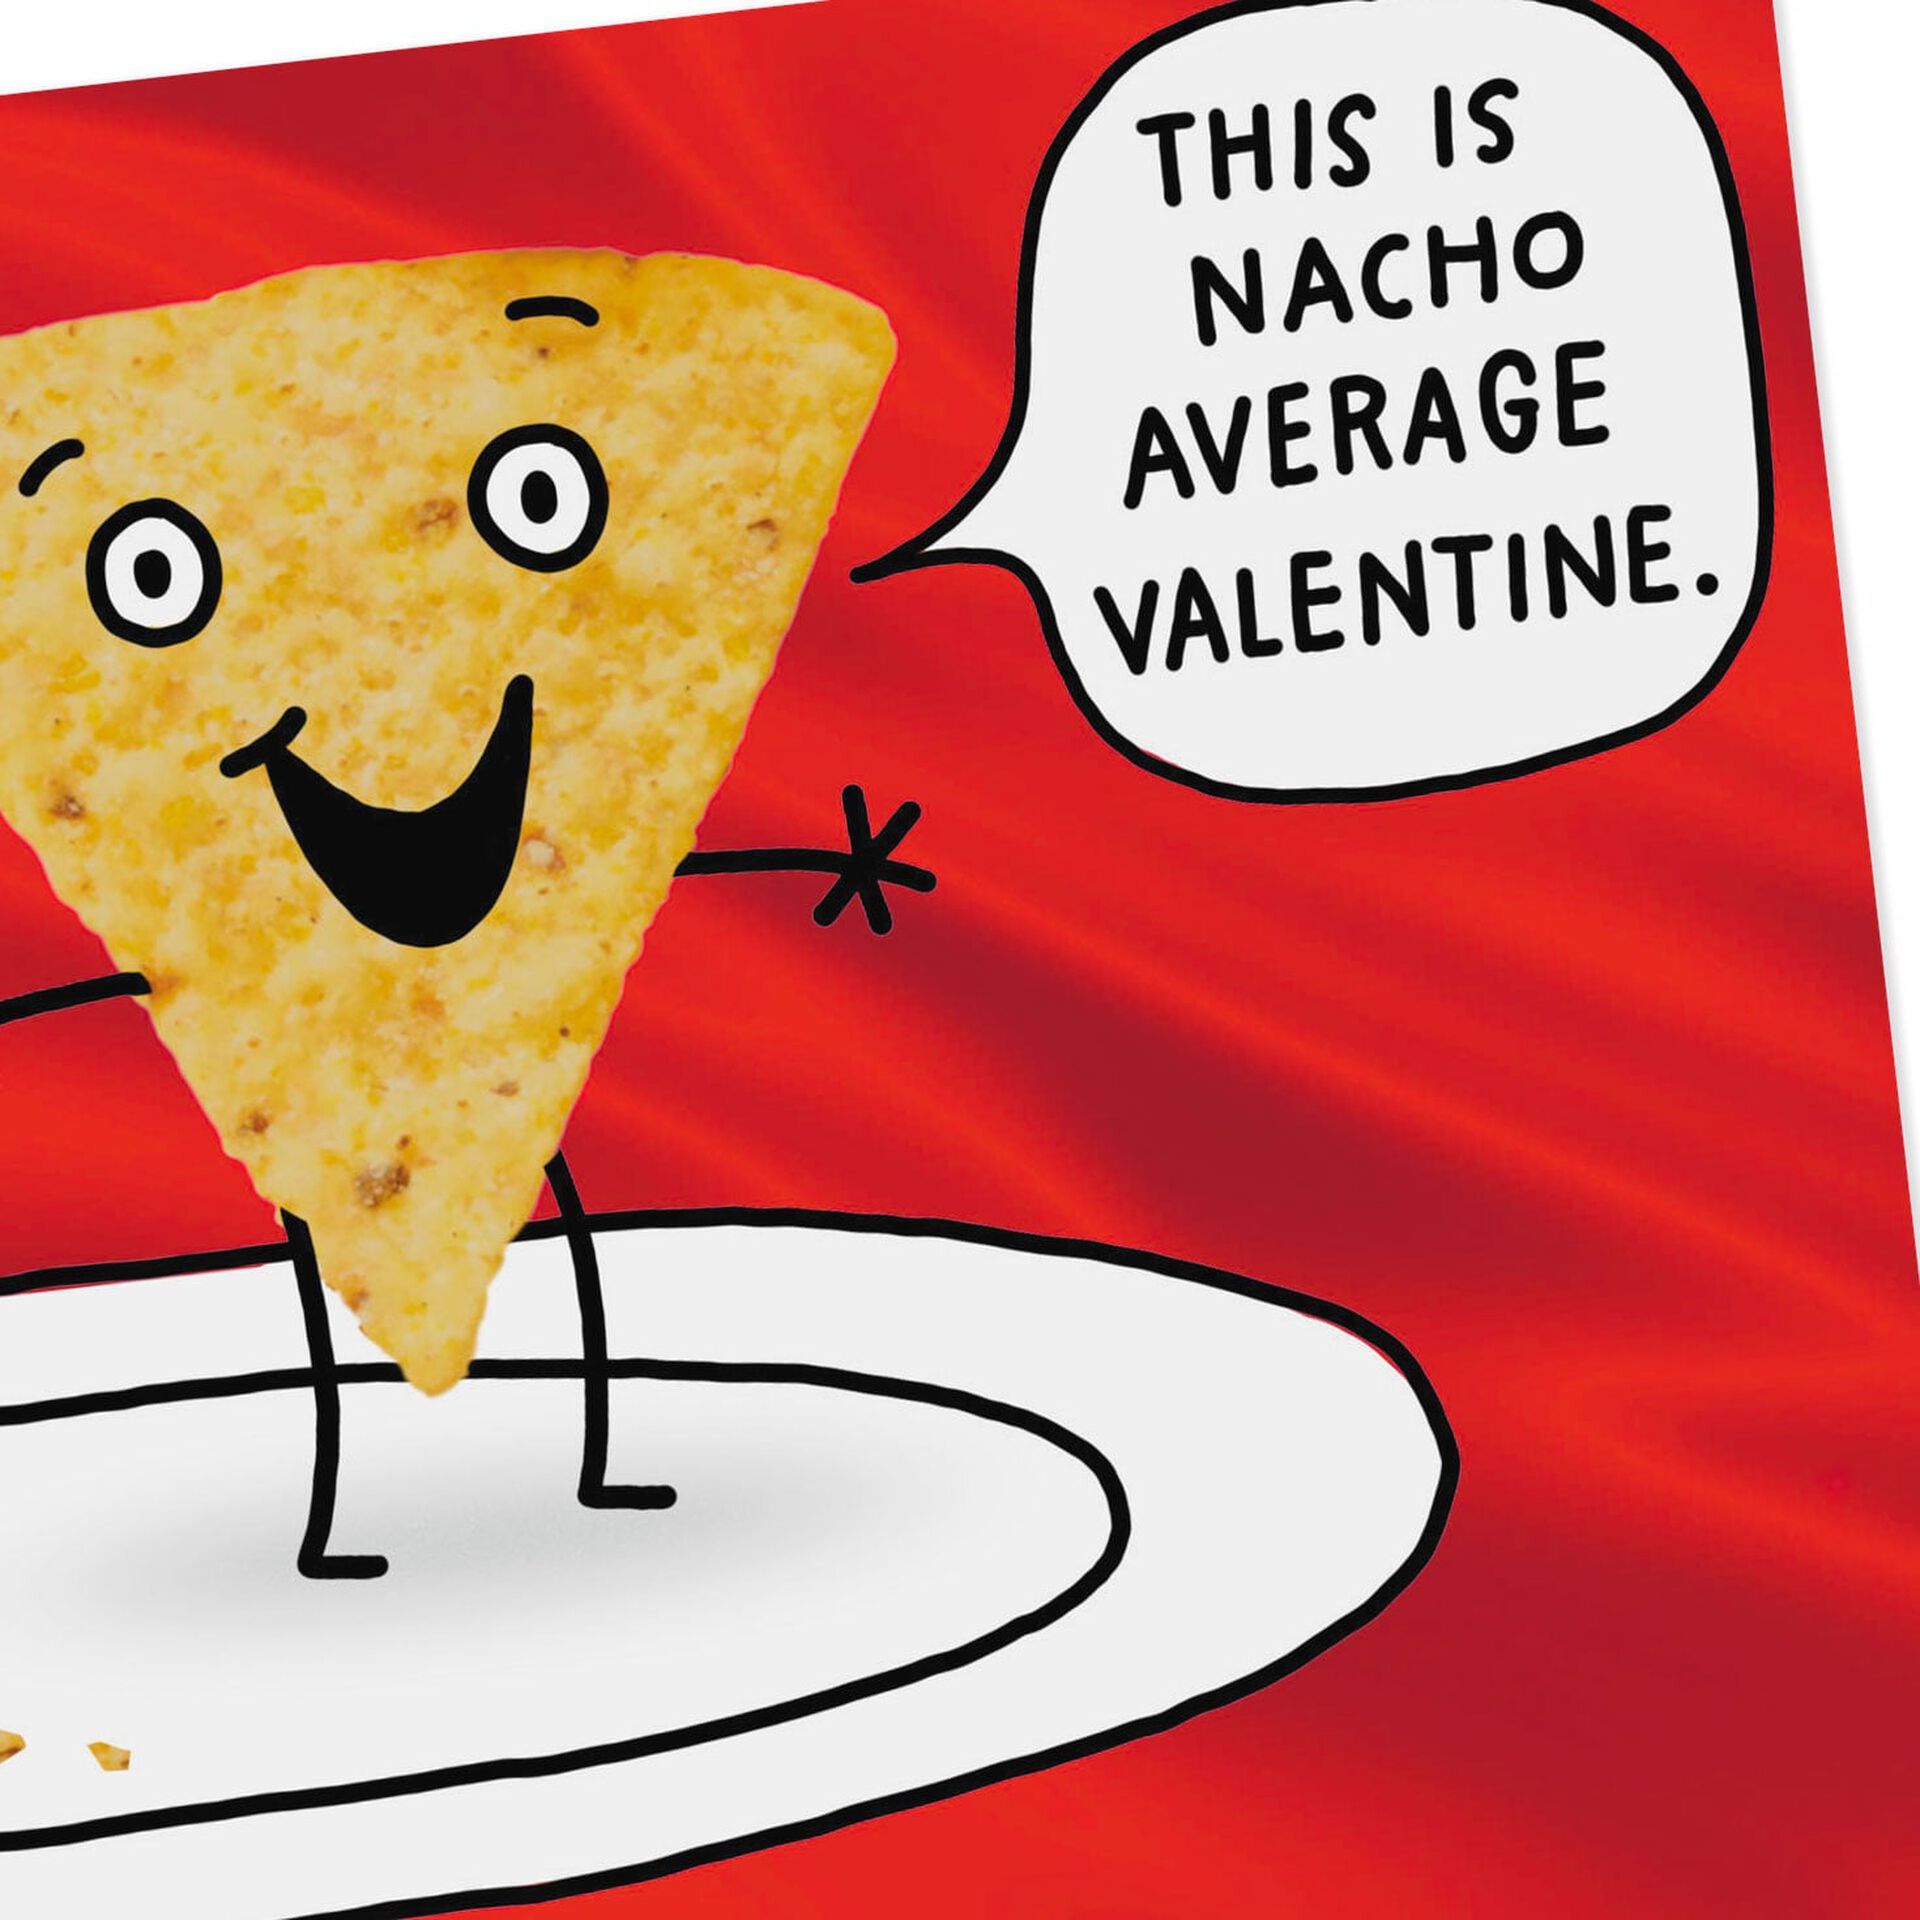 Nacho Average Valentine Funny Valentine S Day Card Greeting Cards Hallmark